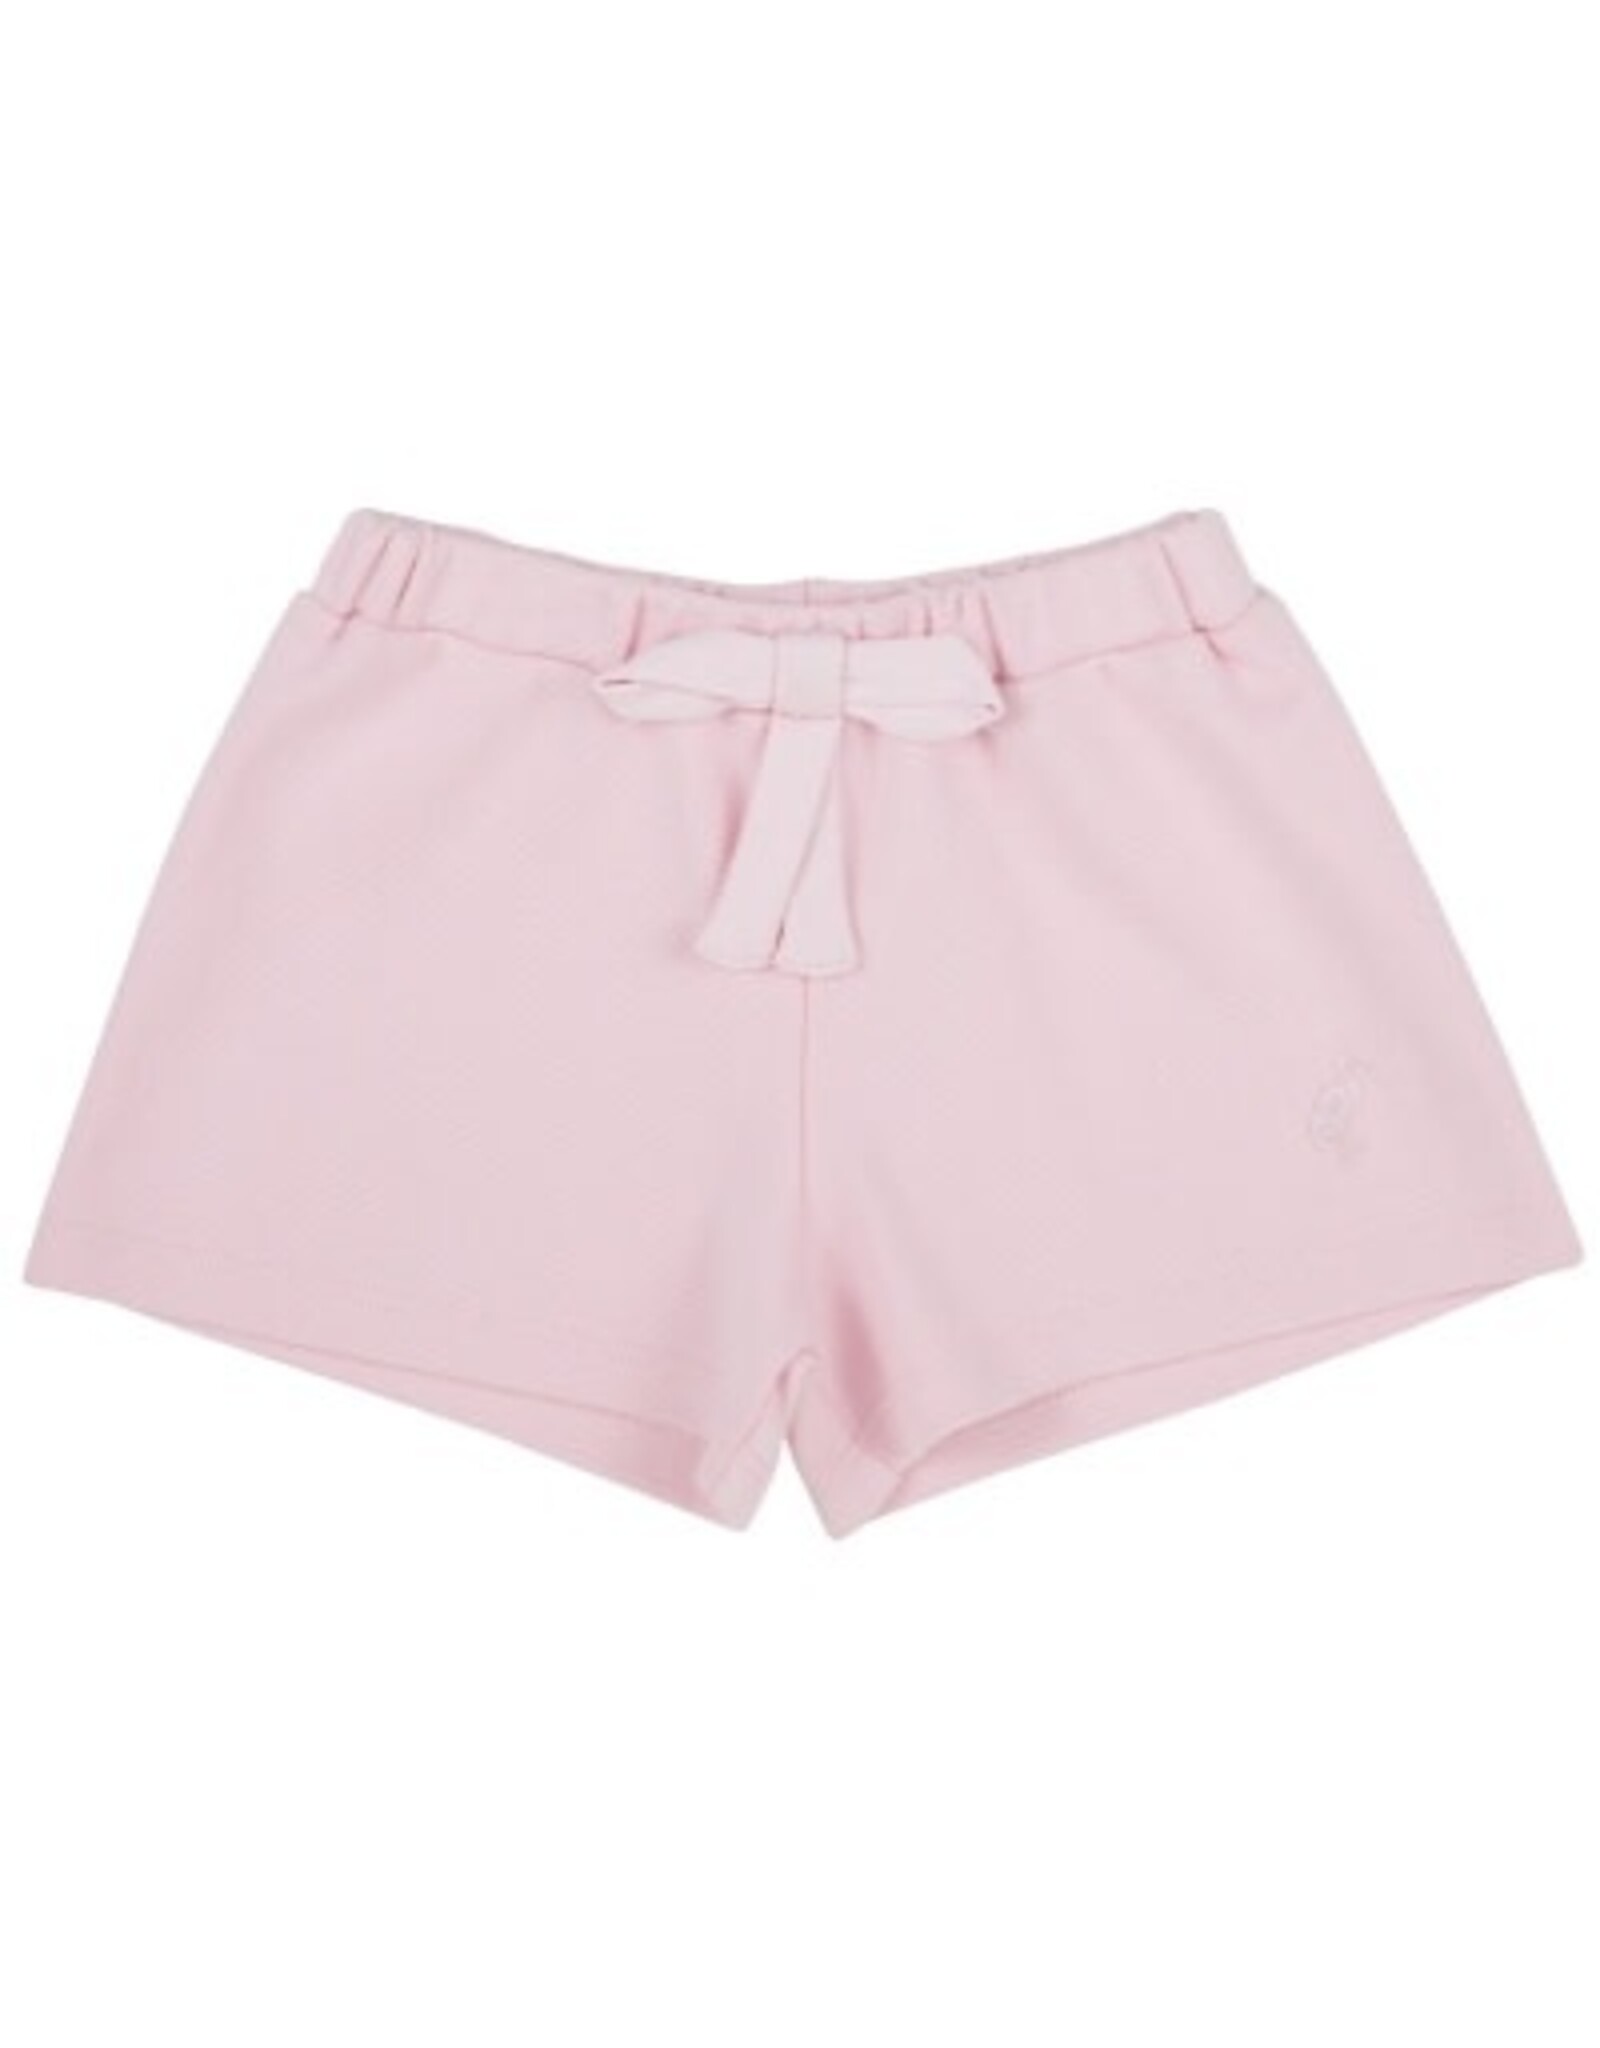 The Beaufort Bonnet Company Shipley Shorts, Palm Beach Pink